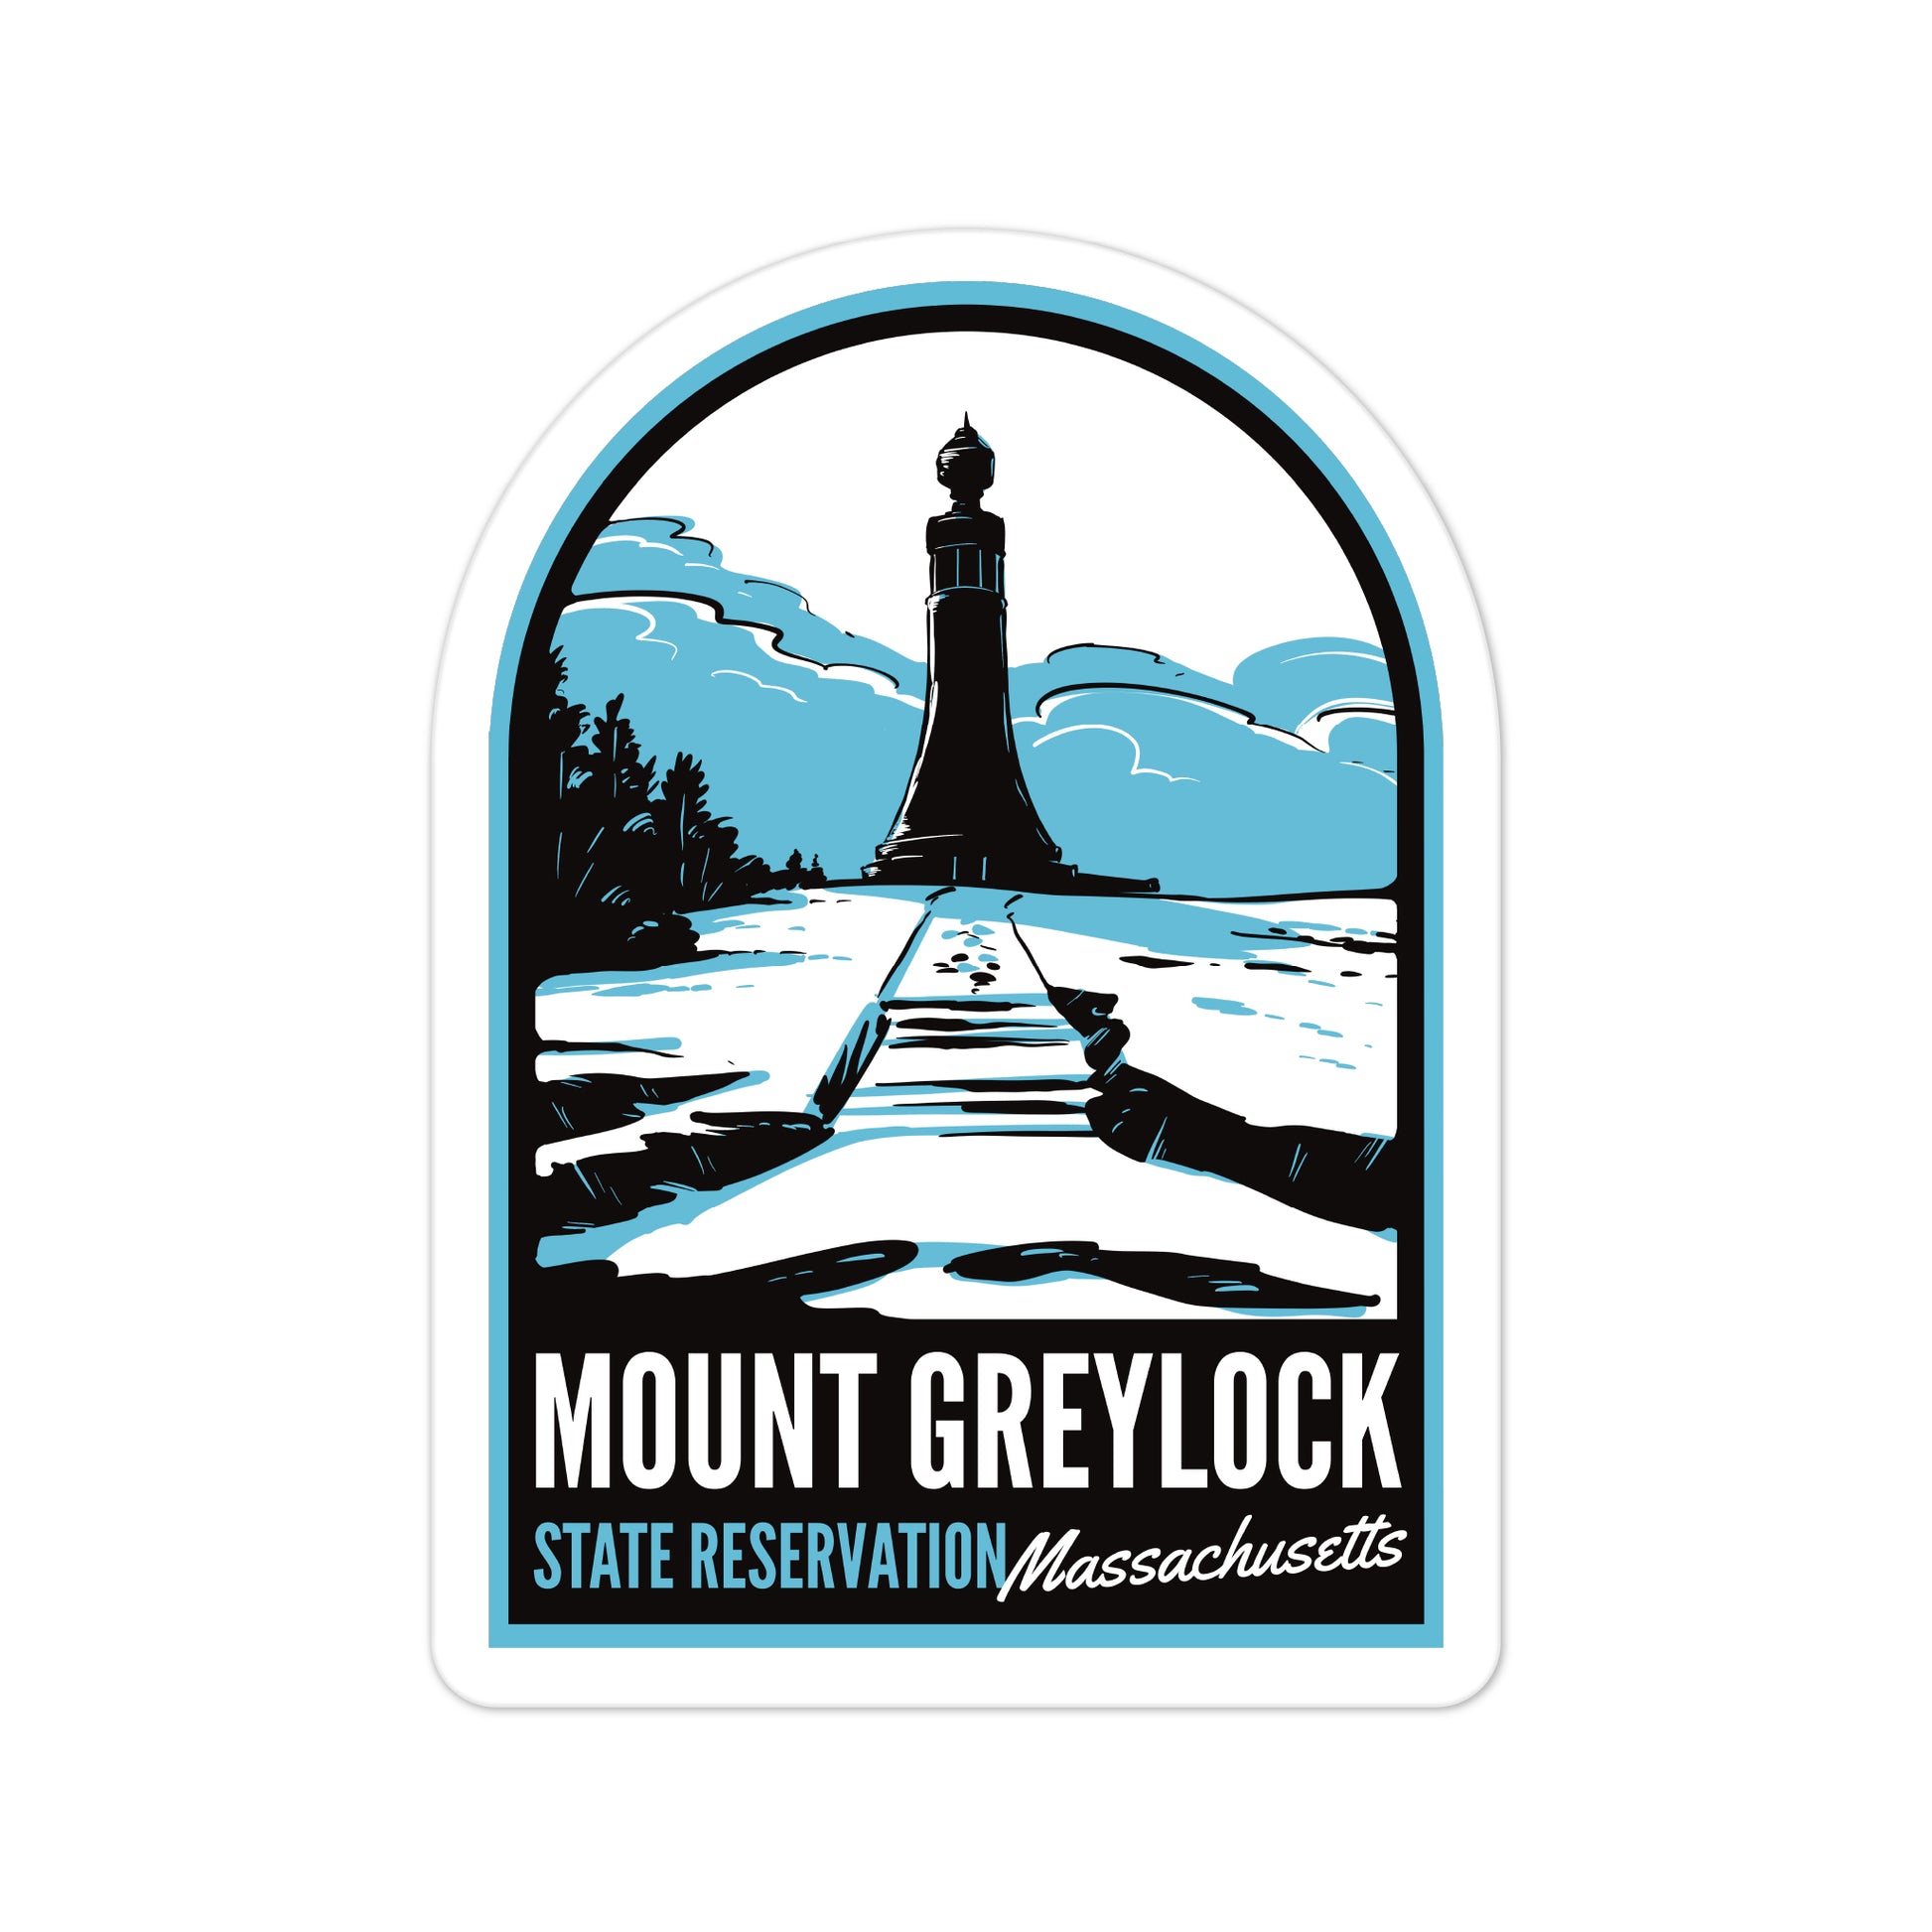 A sticker of Mount Greylock